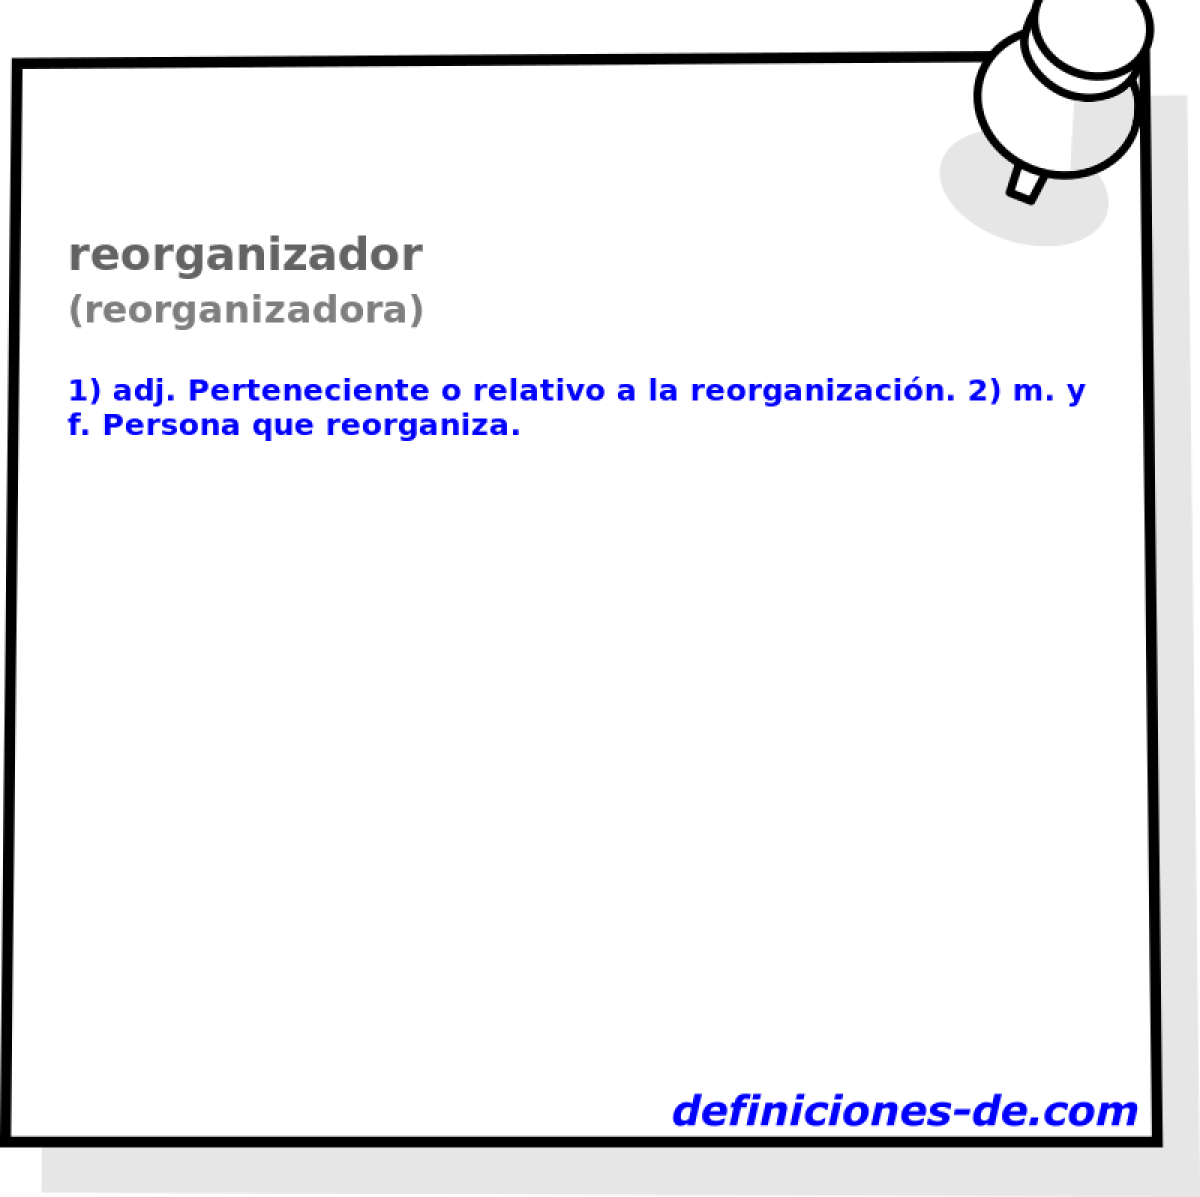 reorganizador (reorganizadora)